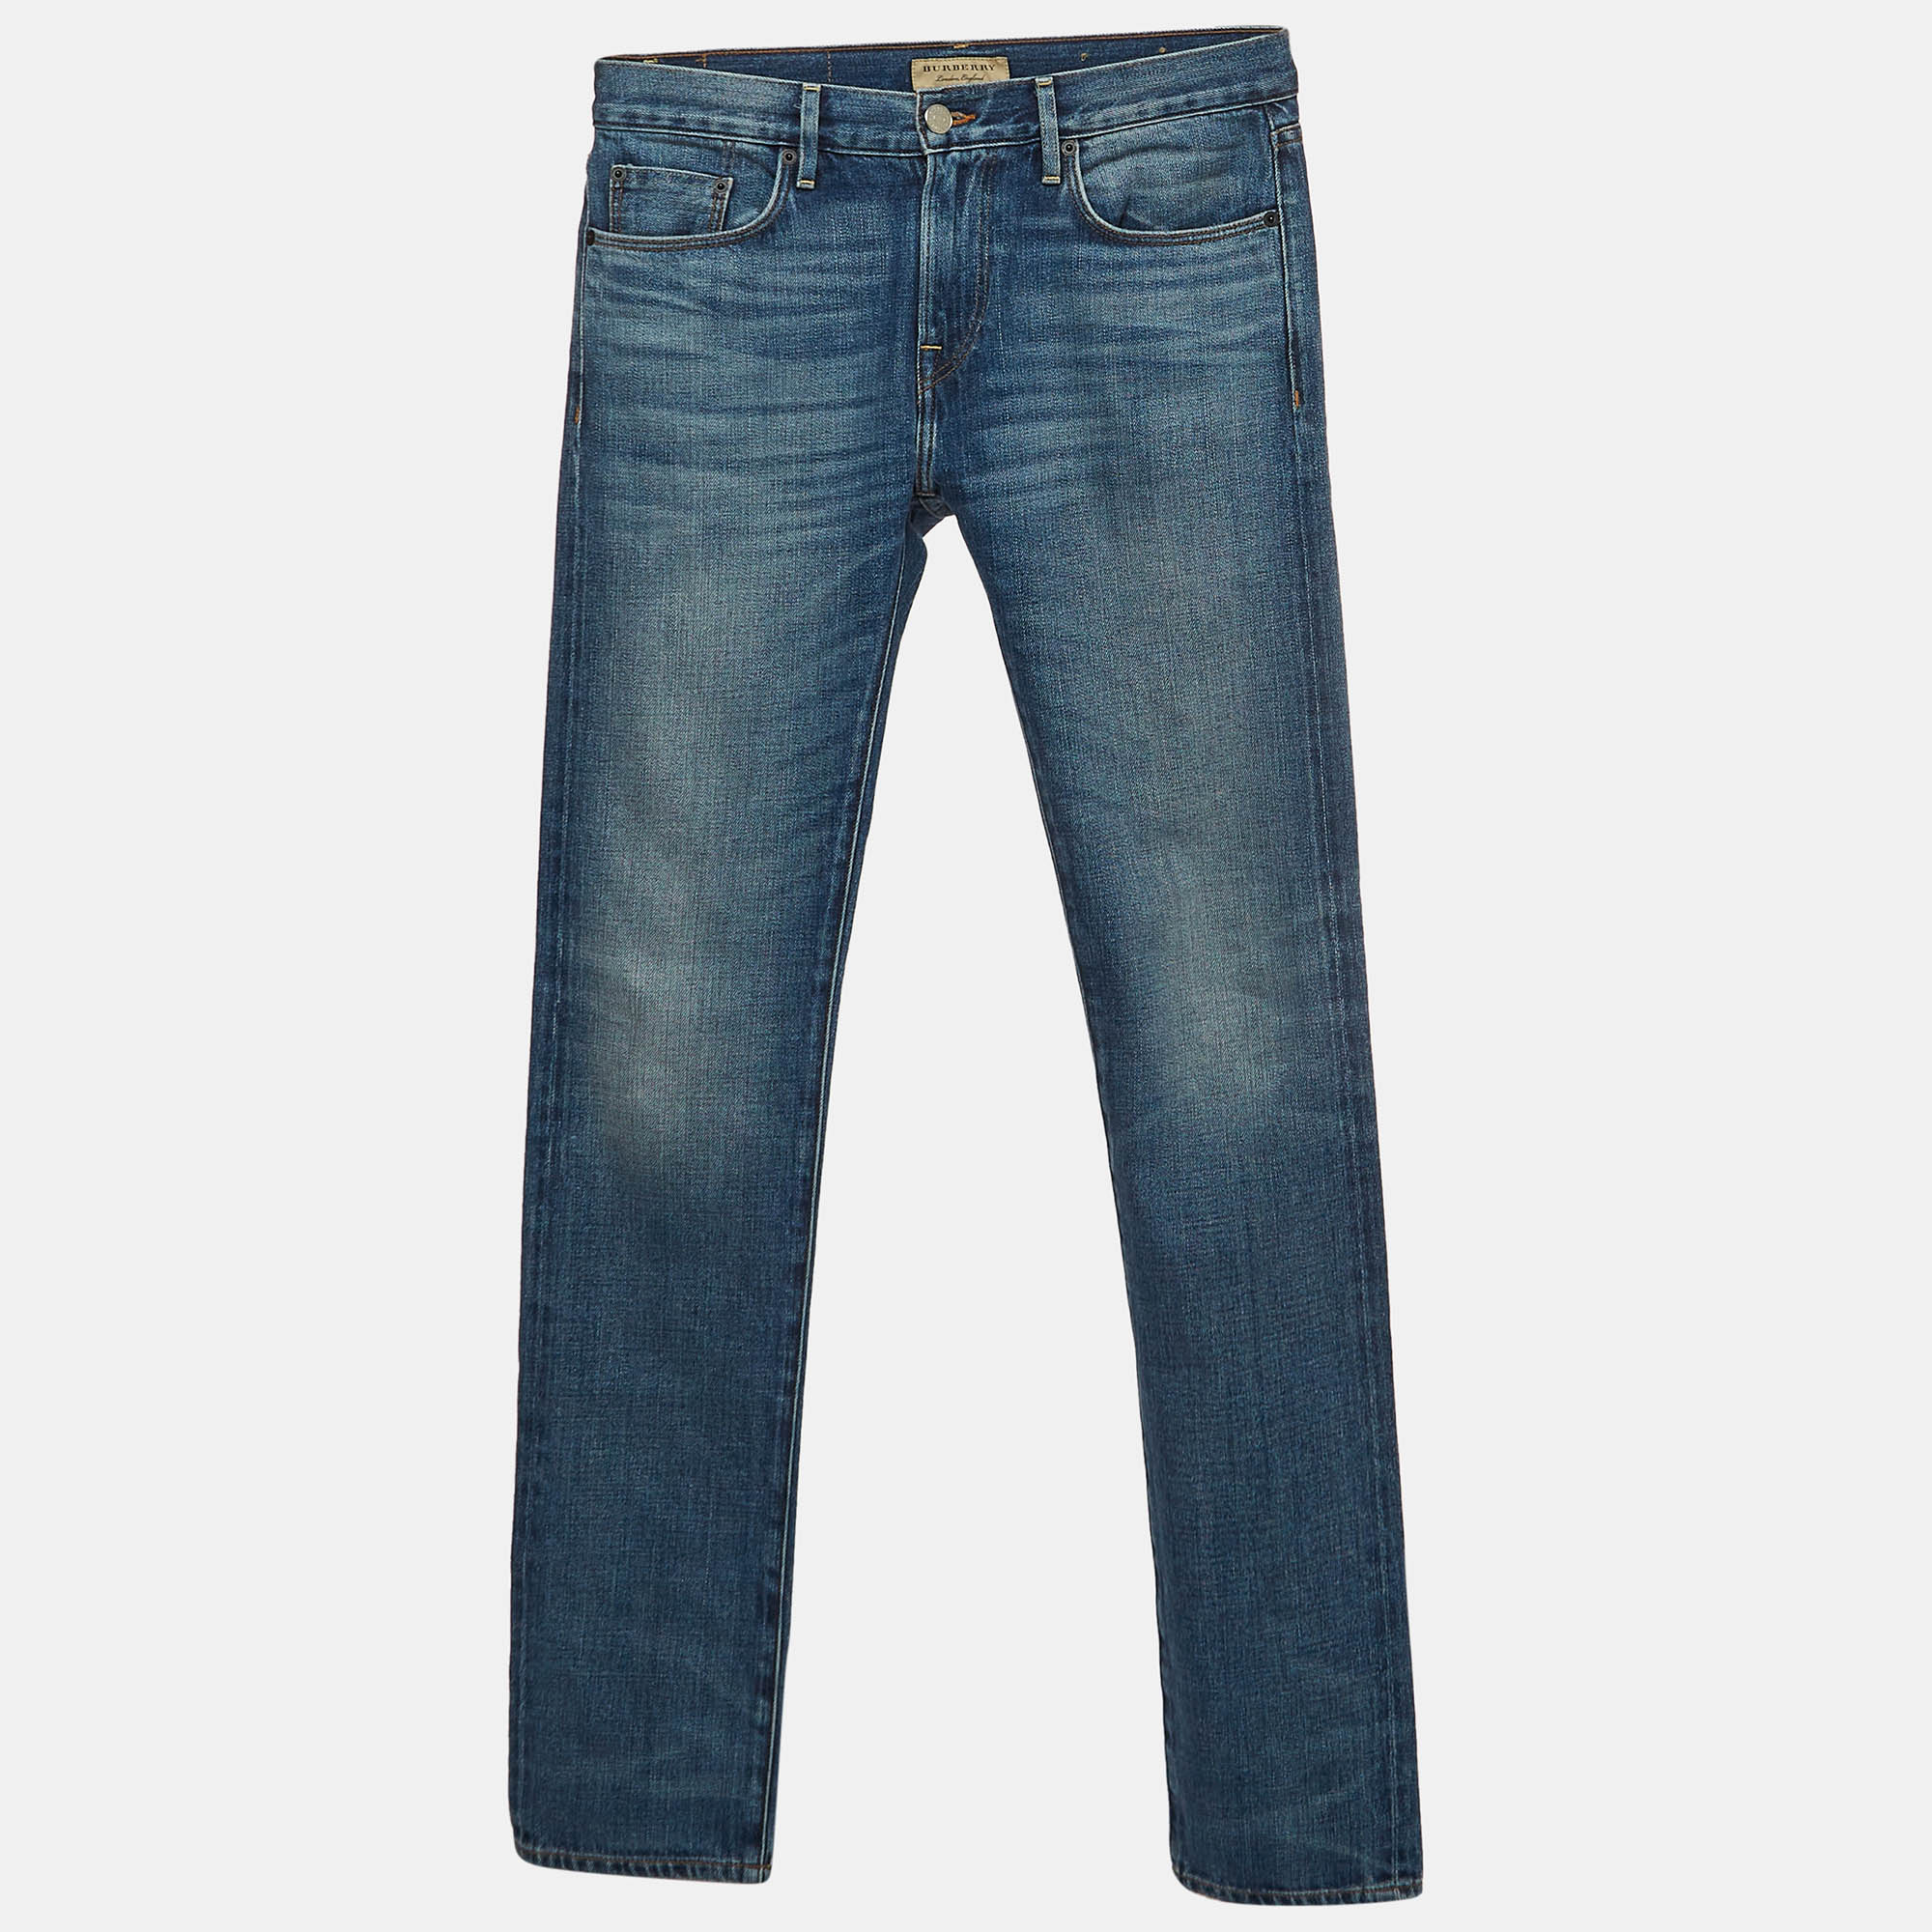 Burberry blue washed denim slim fit jeans s waist 30''